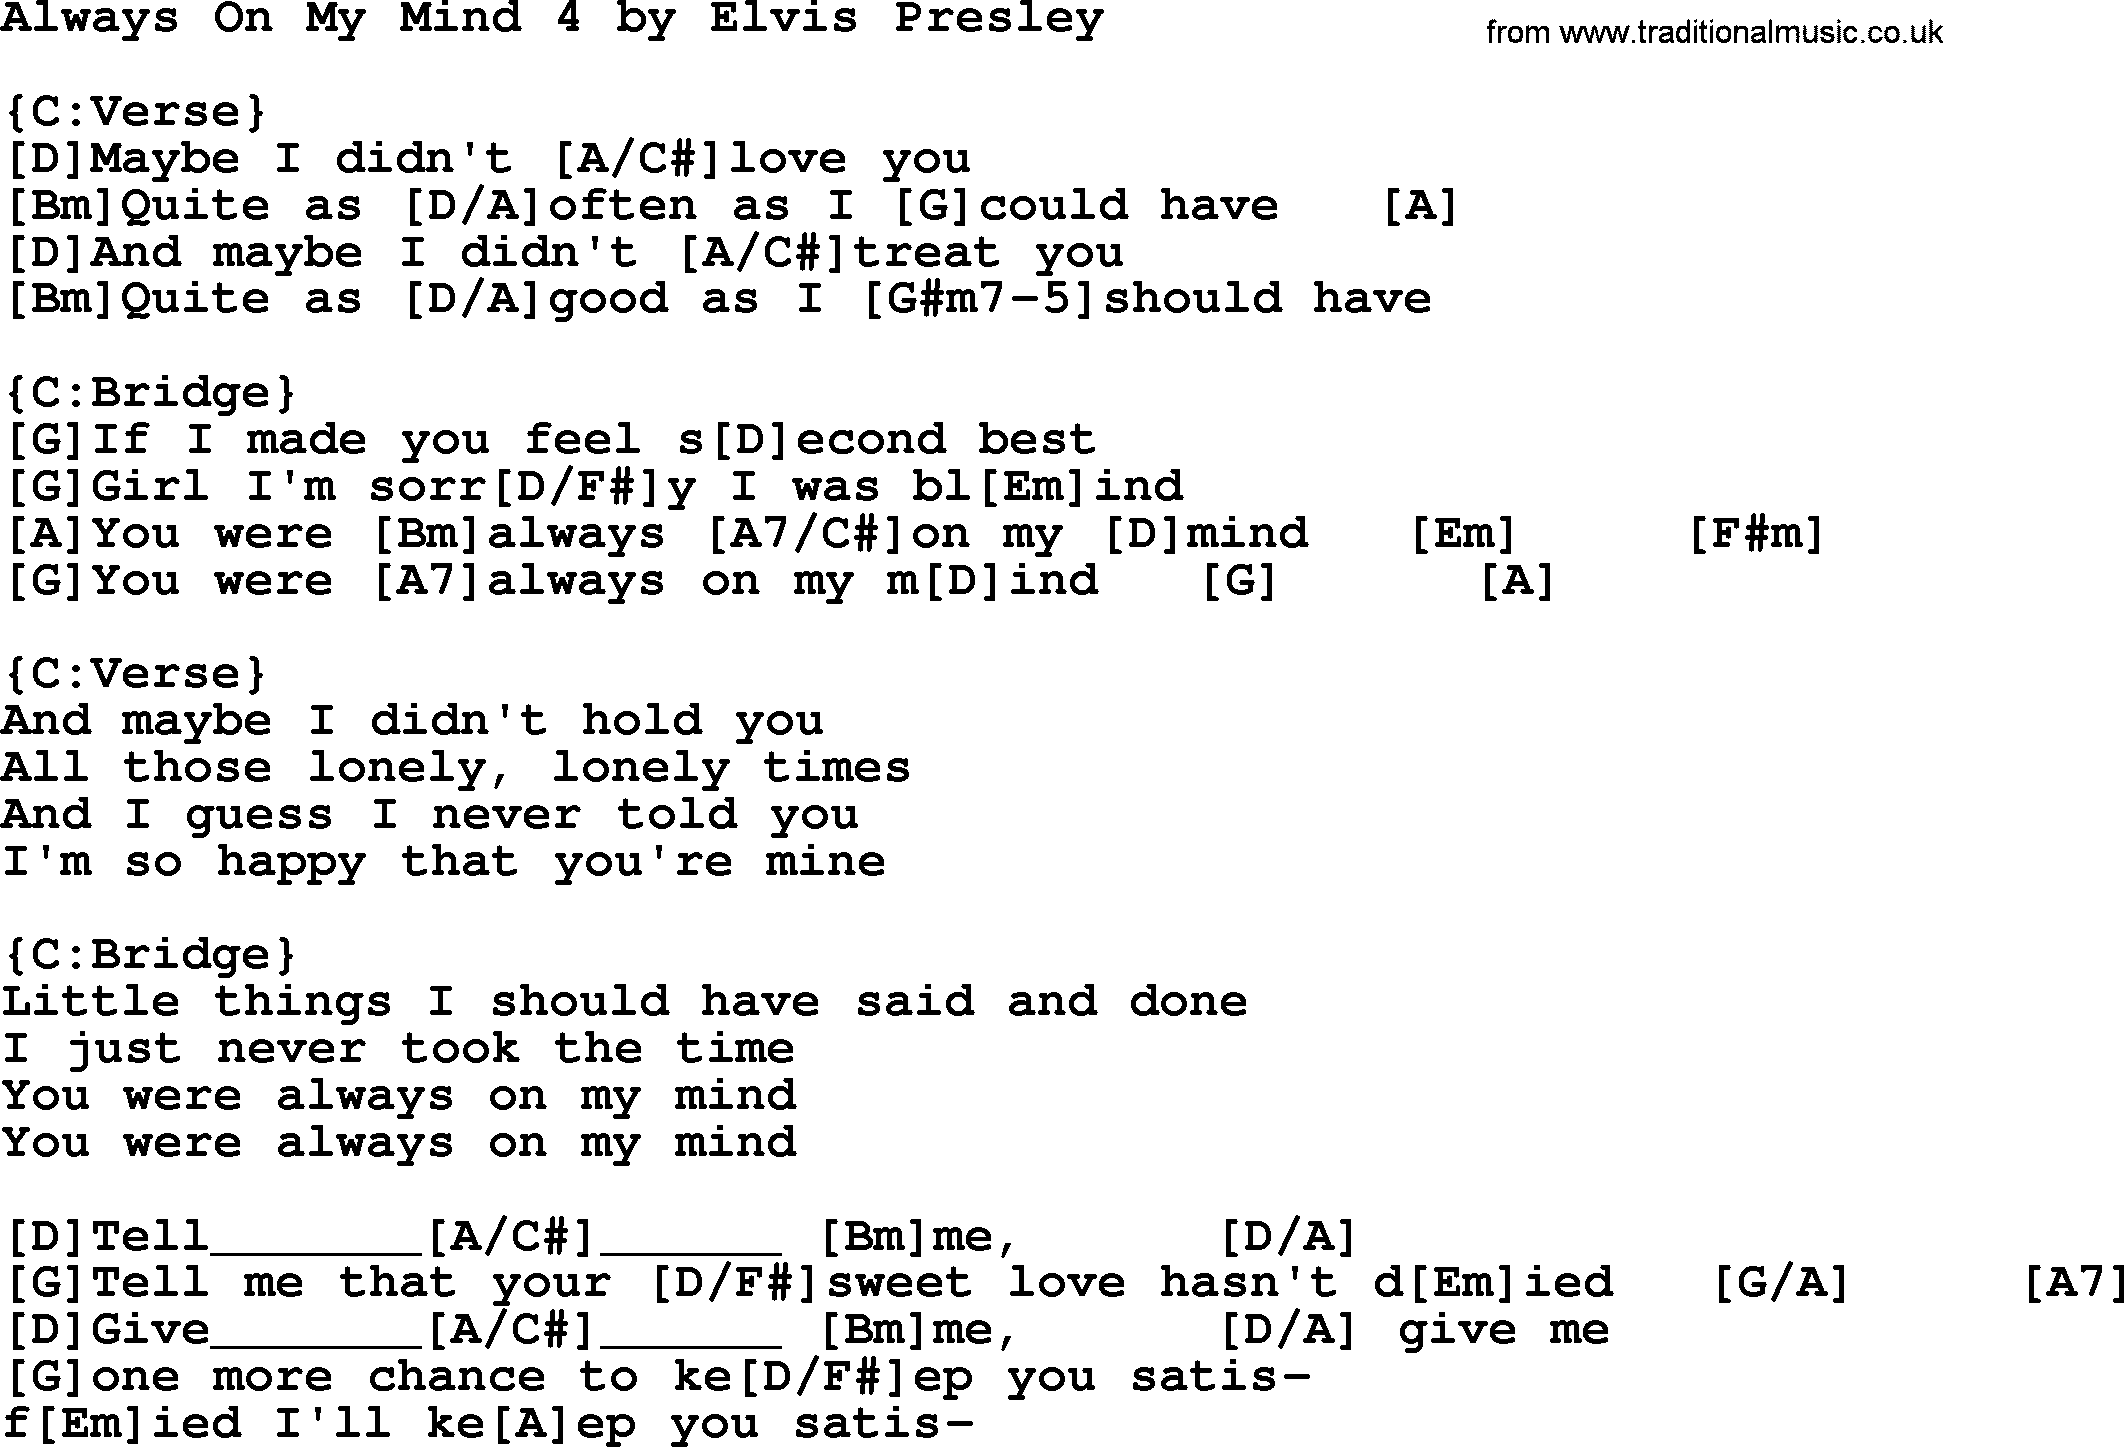 Elvis Presley song: Always On My Mind 4, lyrics and chords